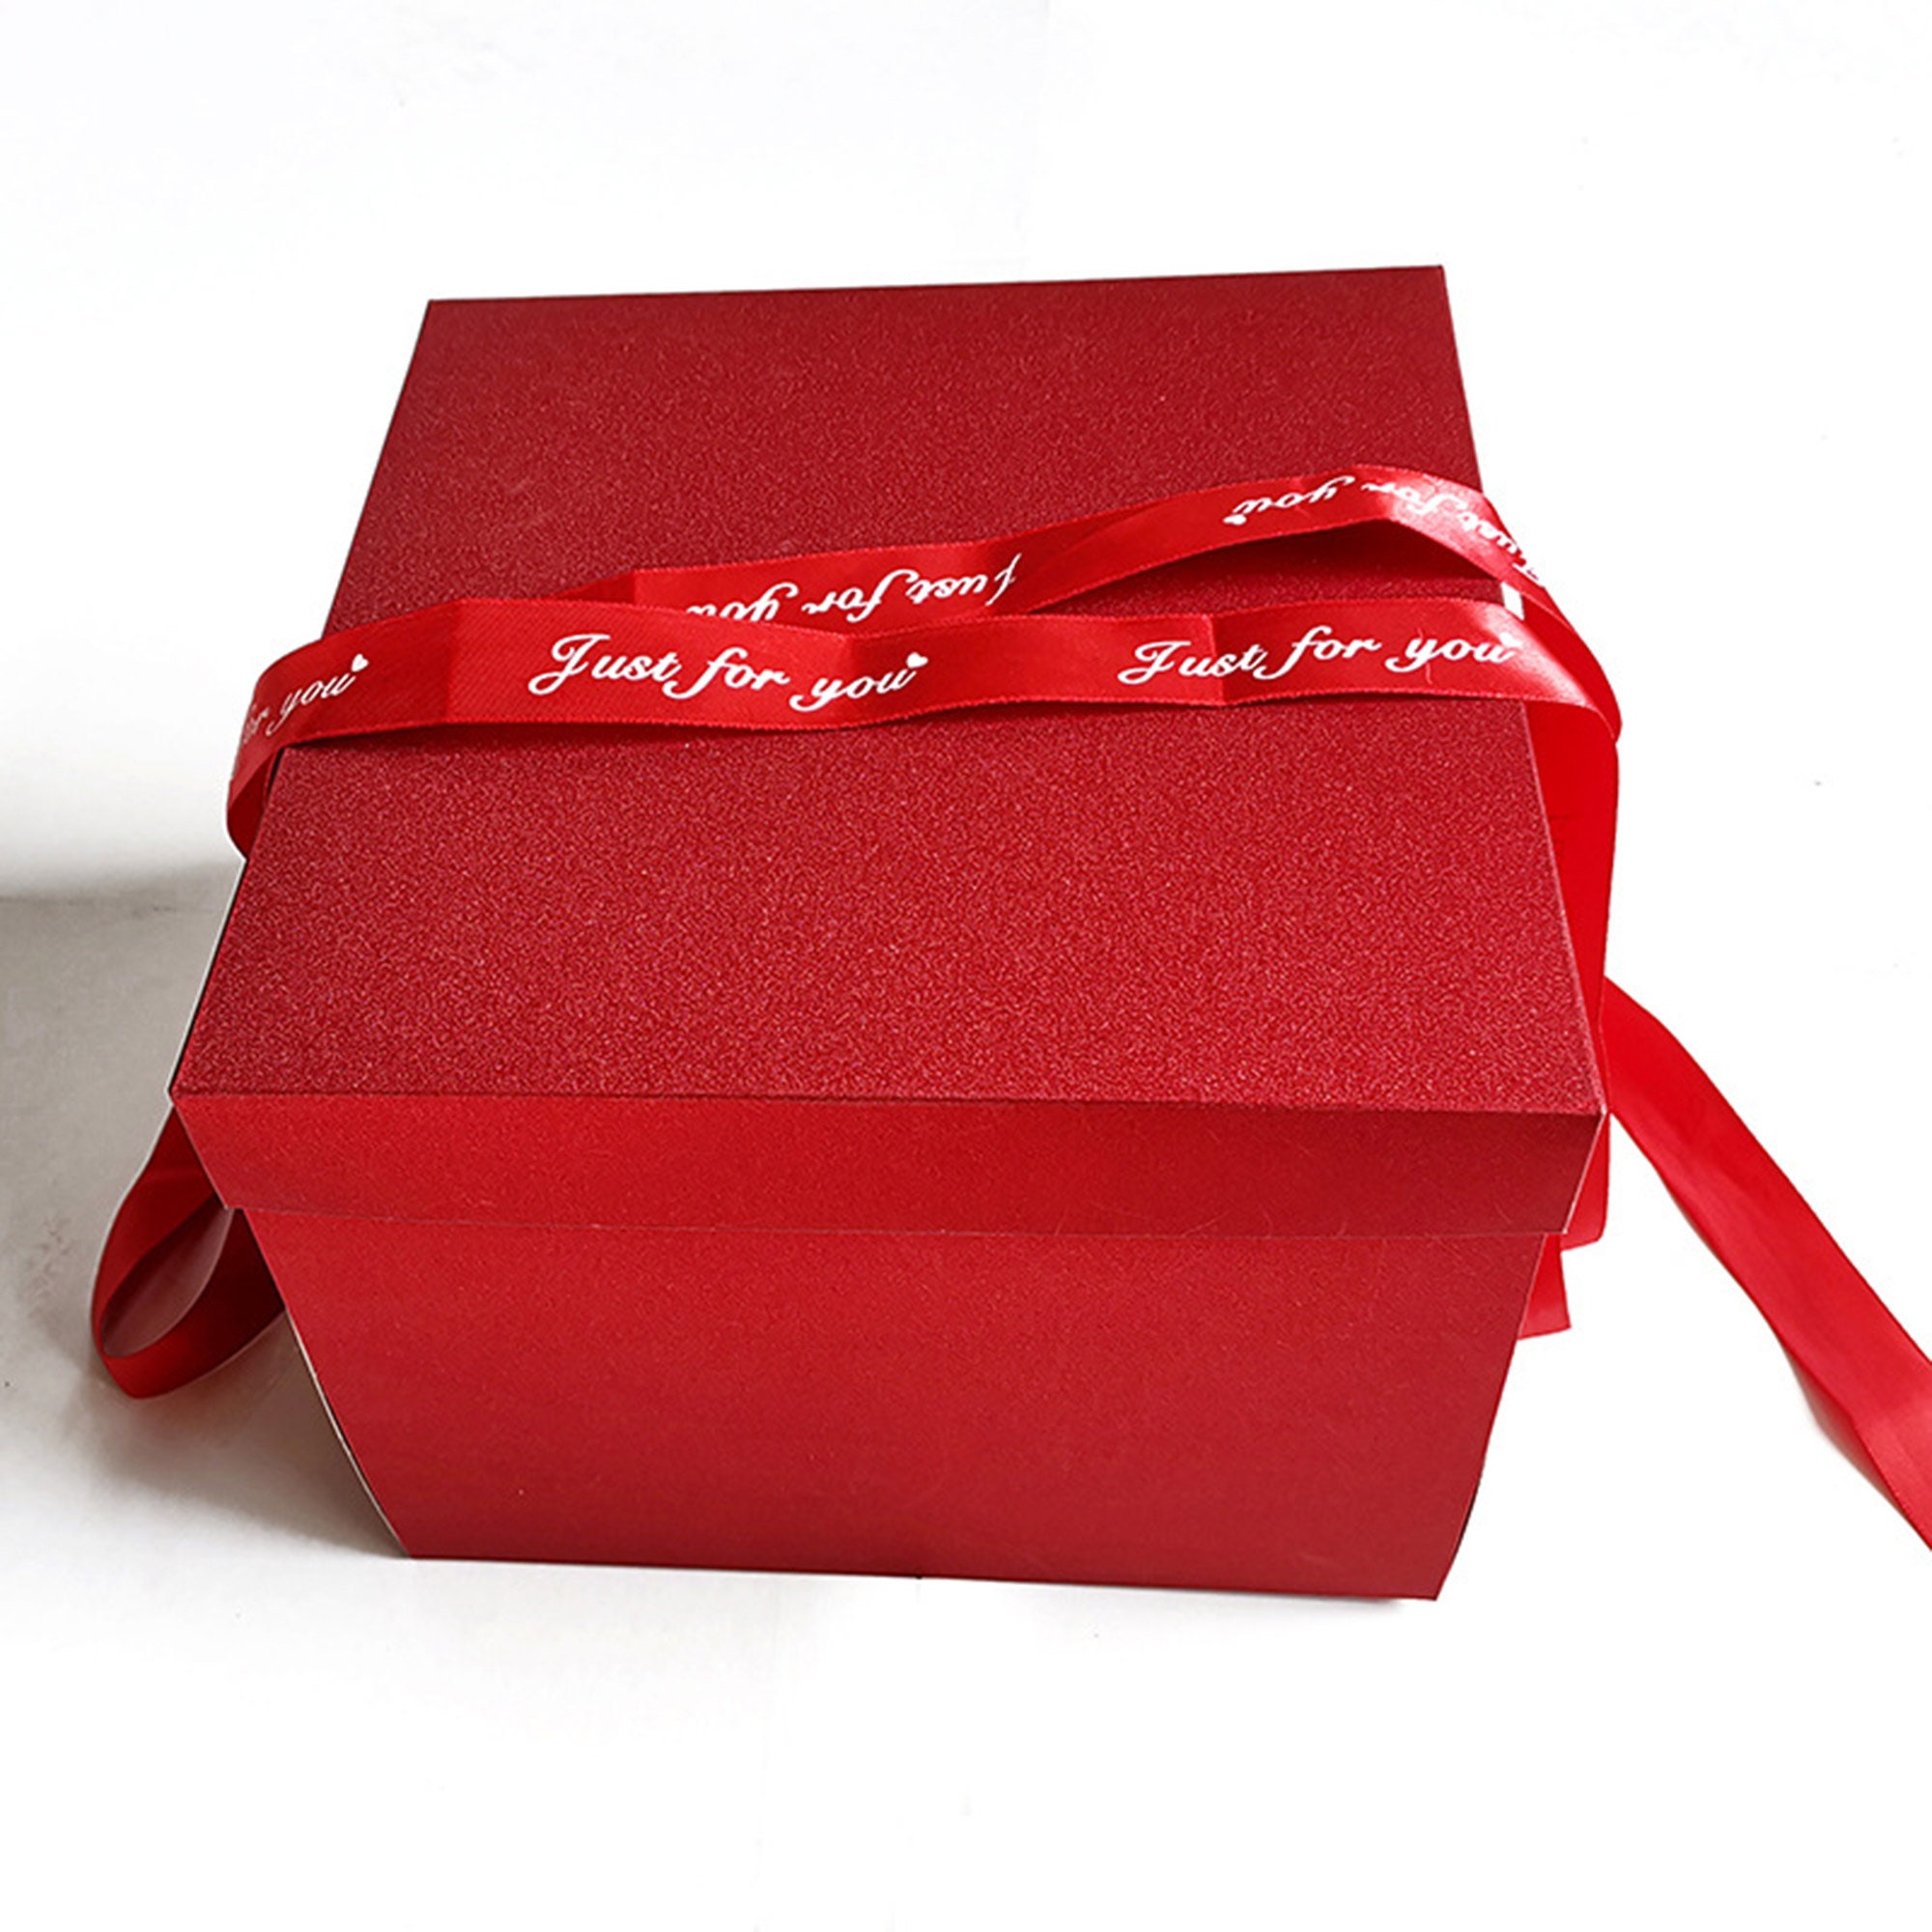 Christmas Gift Box Idea Gift Box Empty Explosion Gift Box DIY Gift Box  Candy Explosion Gift Box Thanksgiving Gift Ideas 